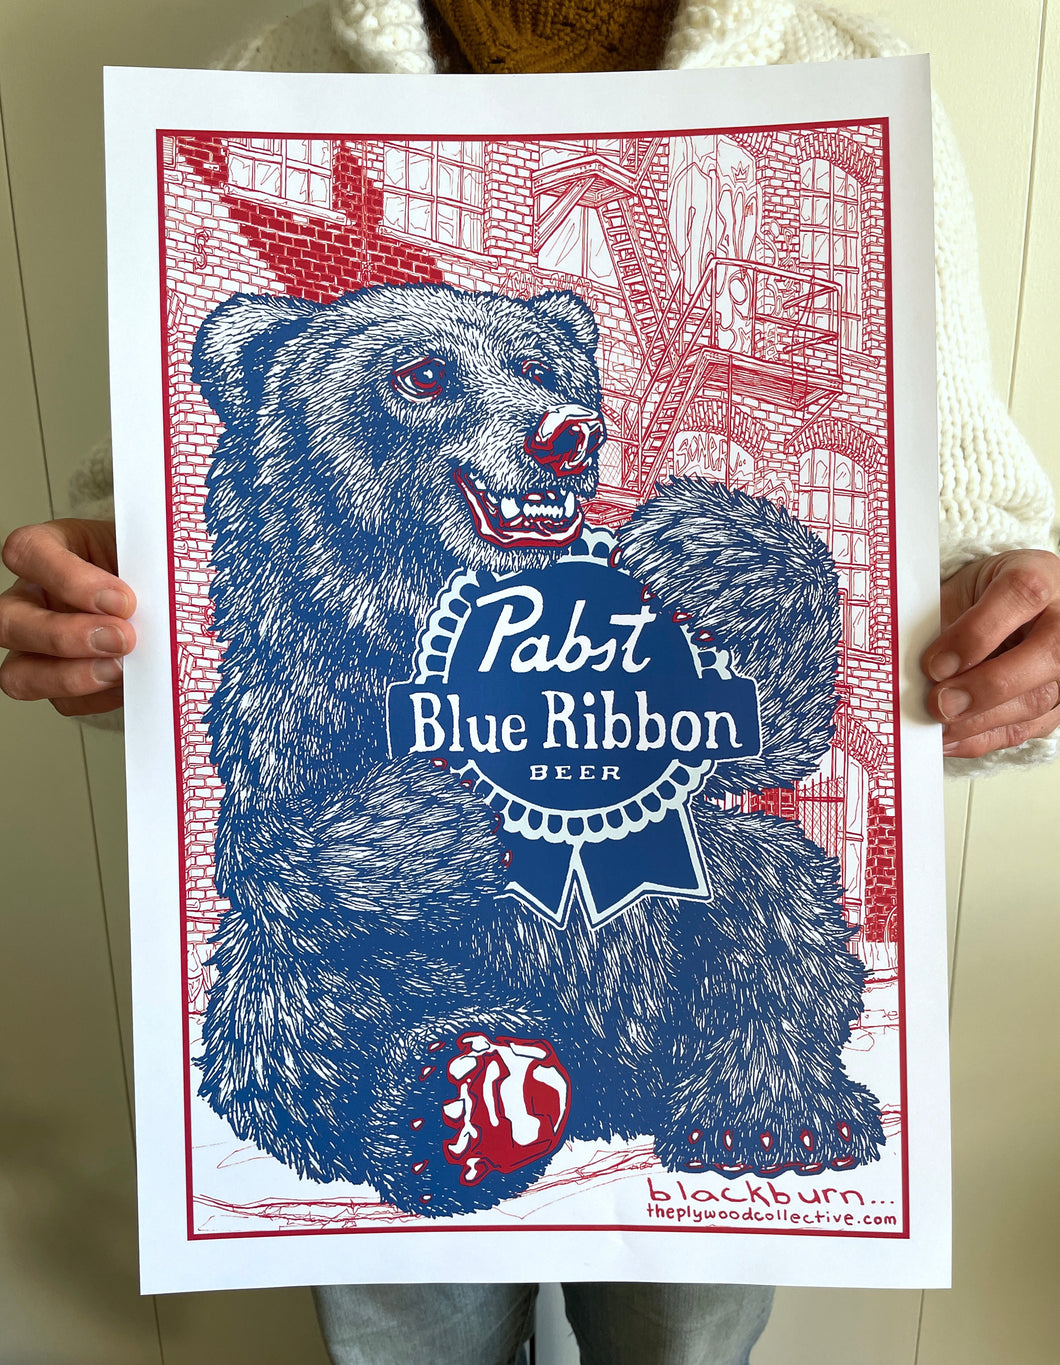 Pabst Blue Ribbon Bear poster (2015)